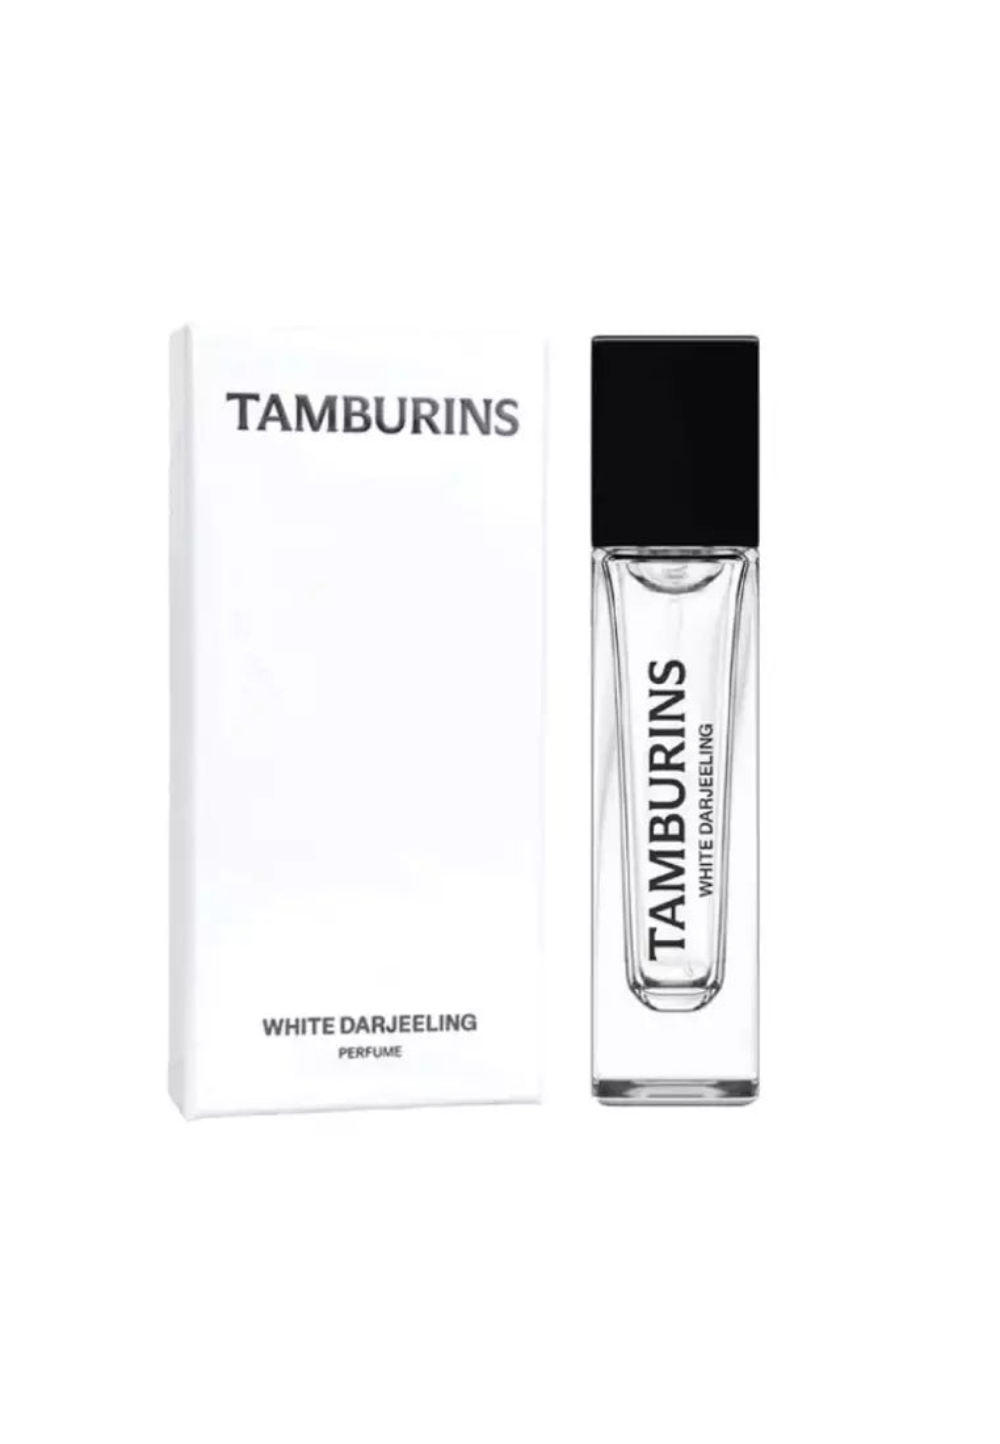 TAMBURINS Perfume in white bottle, offering Darjeeling fragrance in 11ml or 50ml sizes.